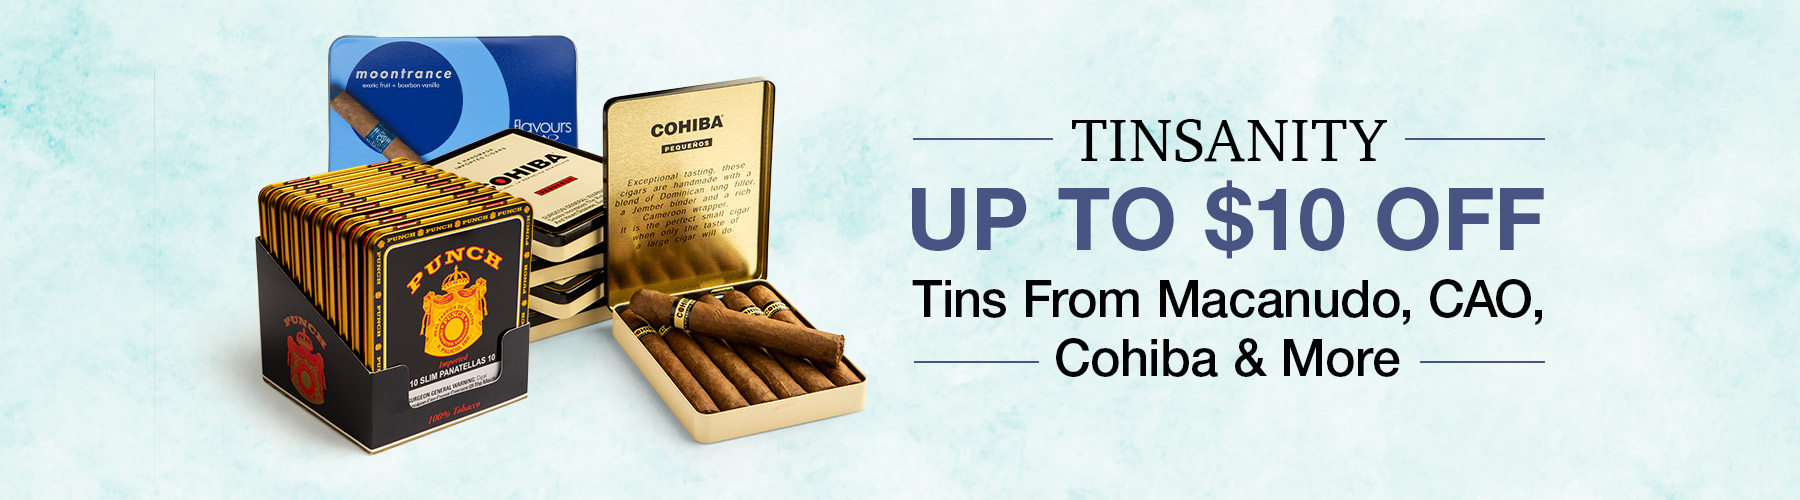 Tinsanity! Up to $10 off tins from Macanudo, CAO, Cohiba & More!